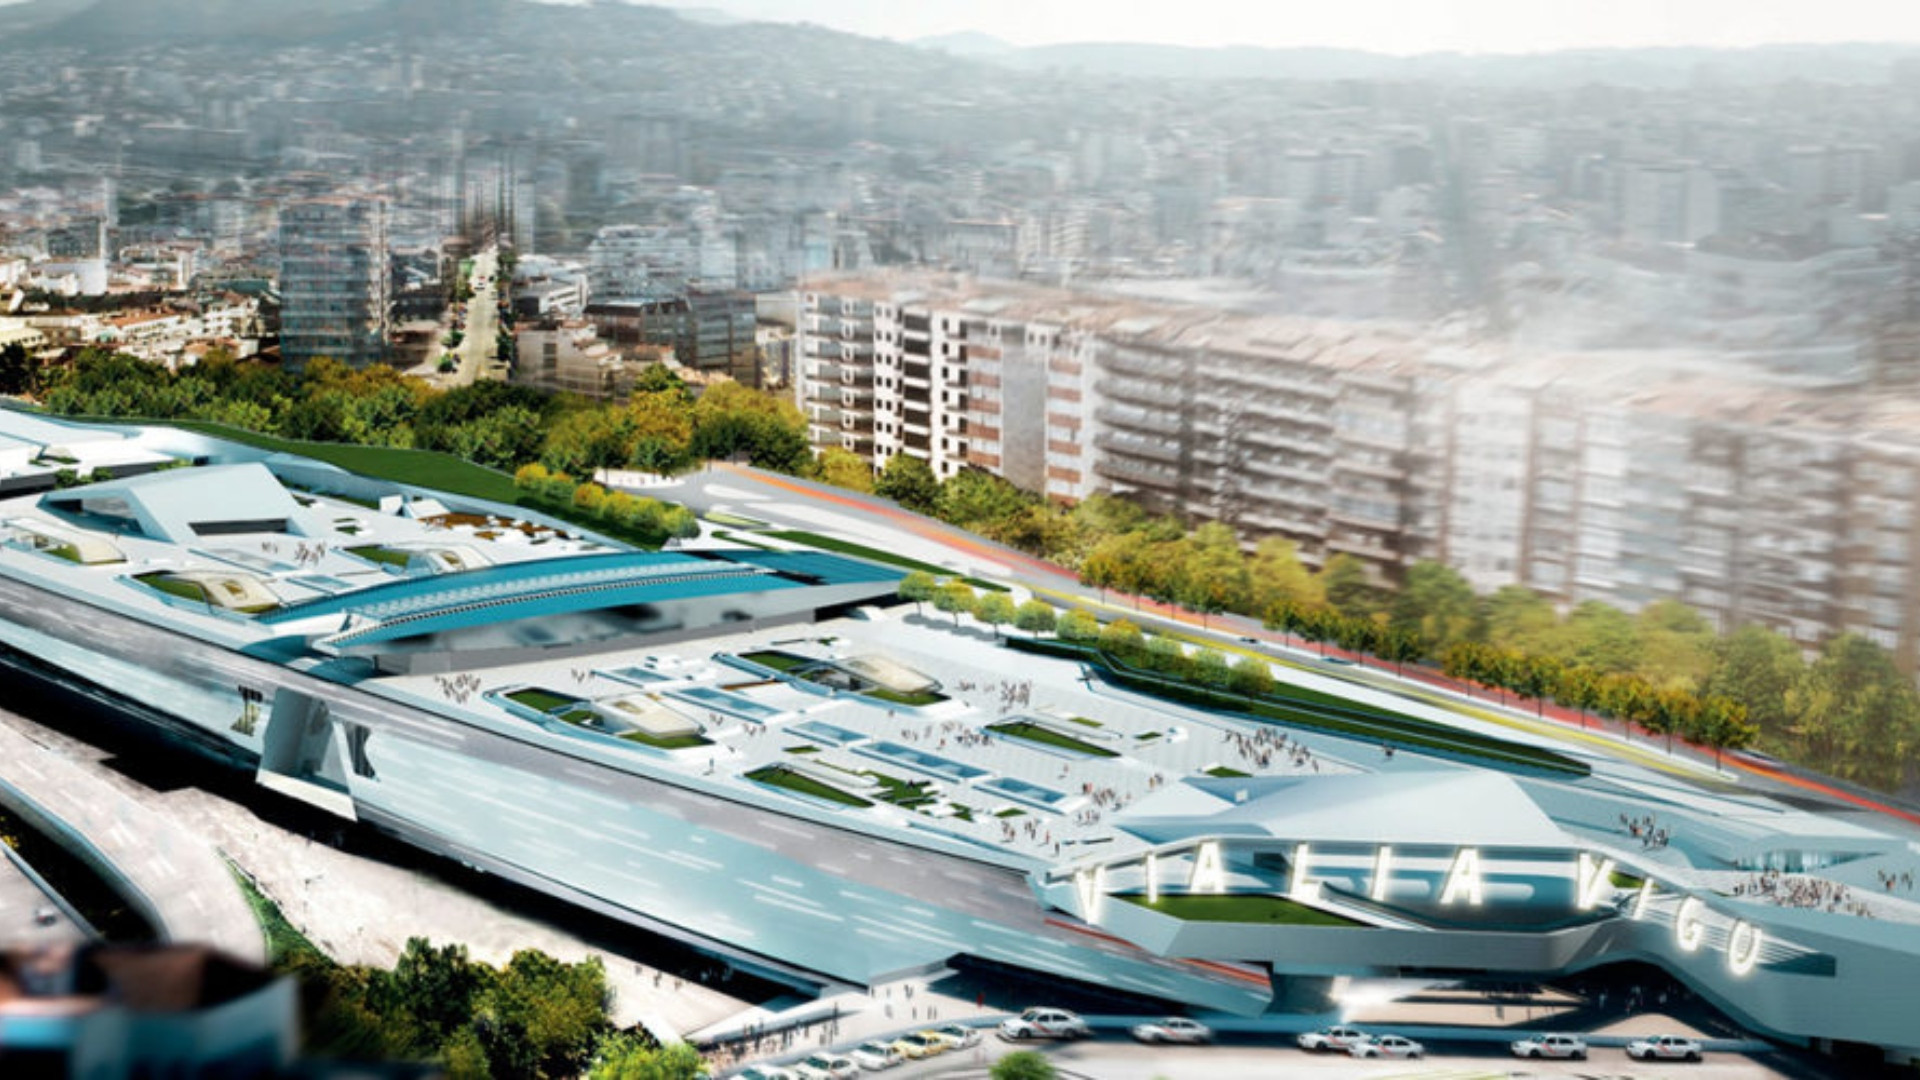 Vista aérea del futuro centro comercial Vialia Vigo, promovido por Ceetrus.